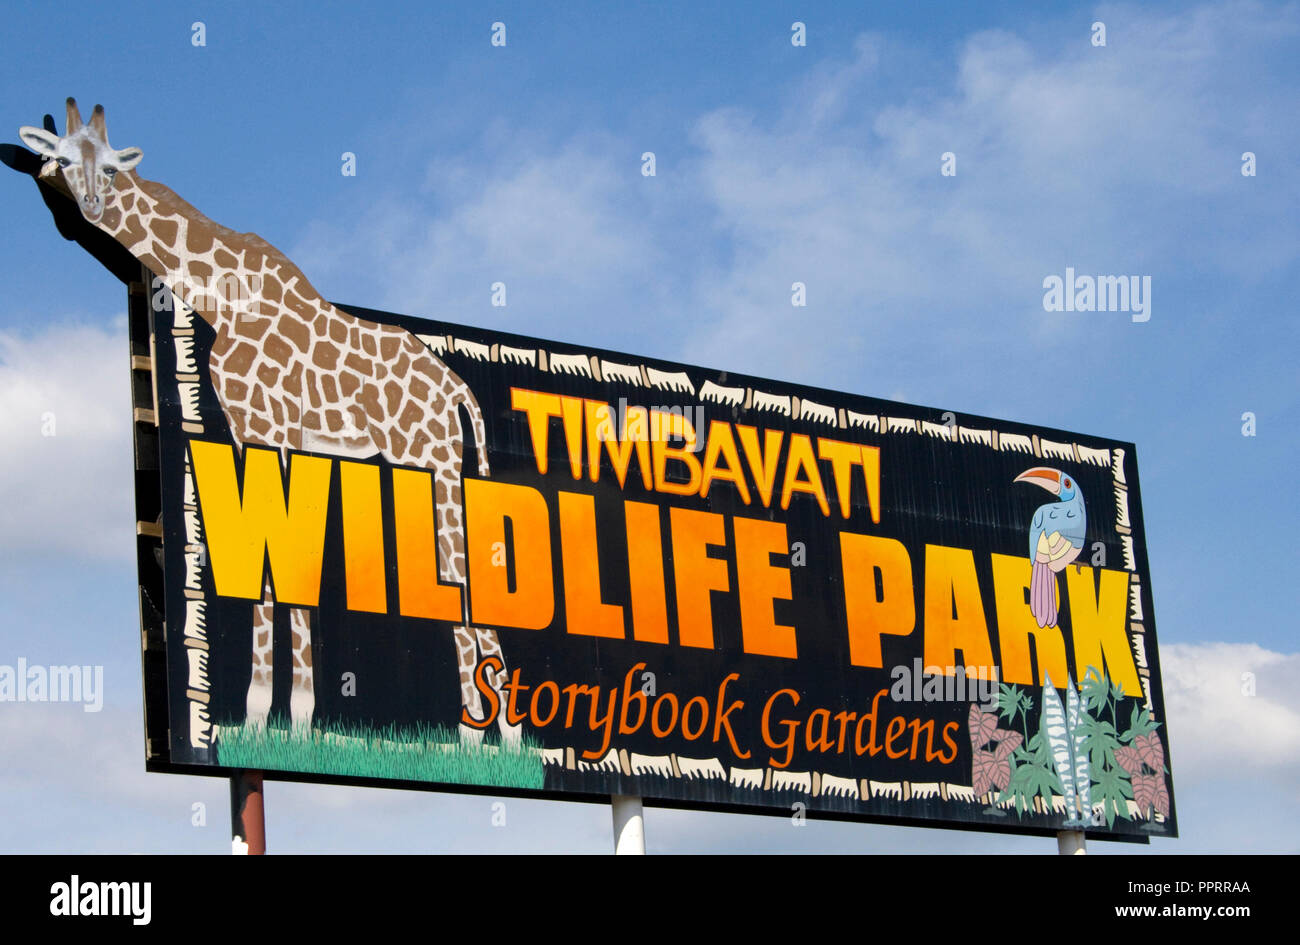 Large billboard sign promoting Timbavati Wildlife Park and